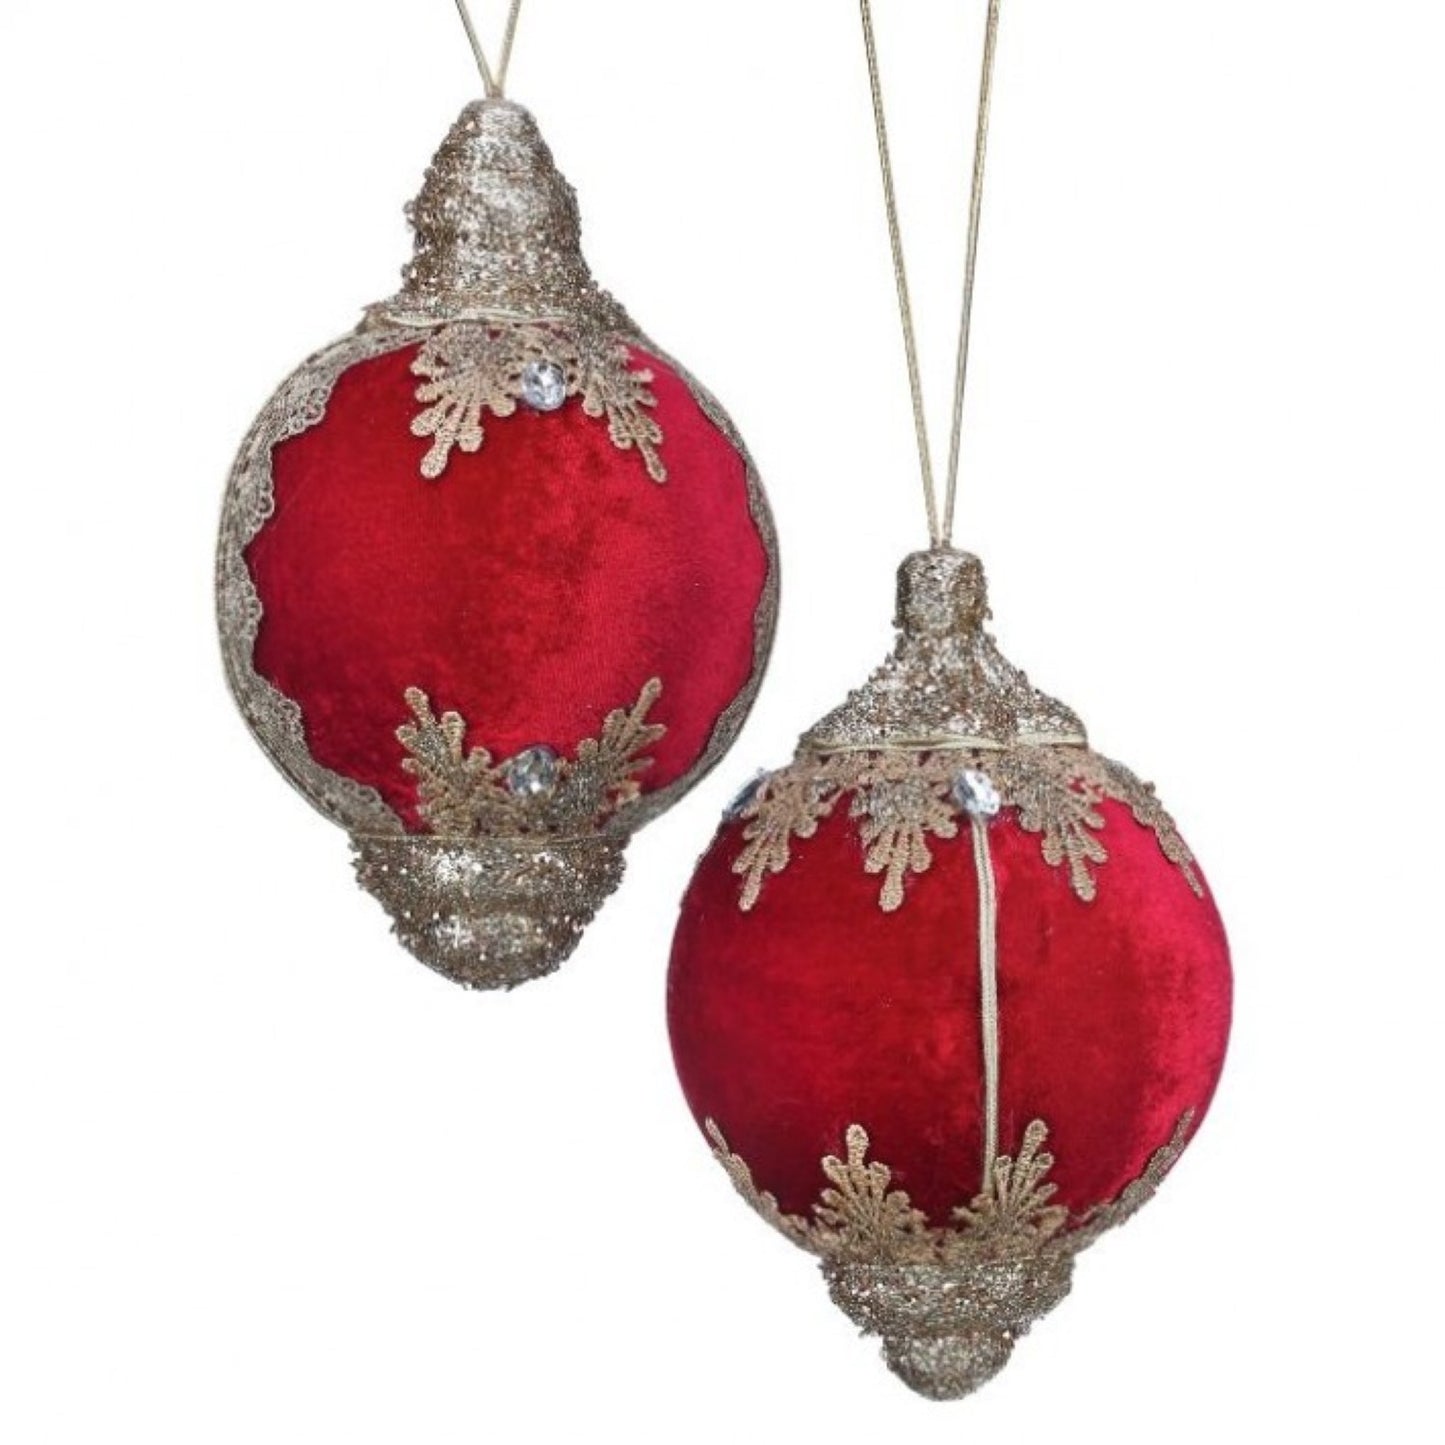 Regency International 7.5"Fabric Jewel Finial Ornament Set of 2, Assortment